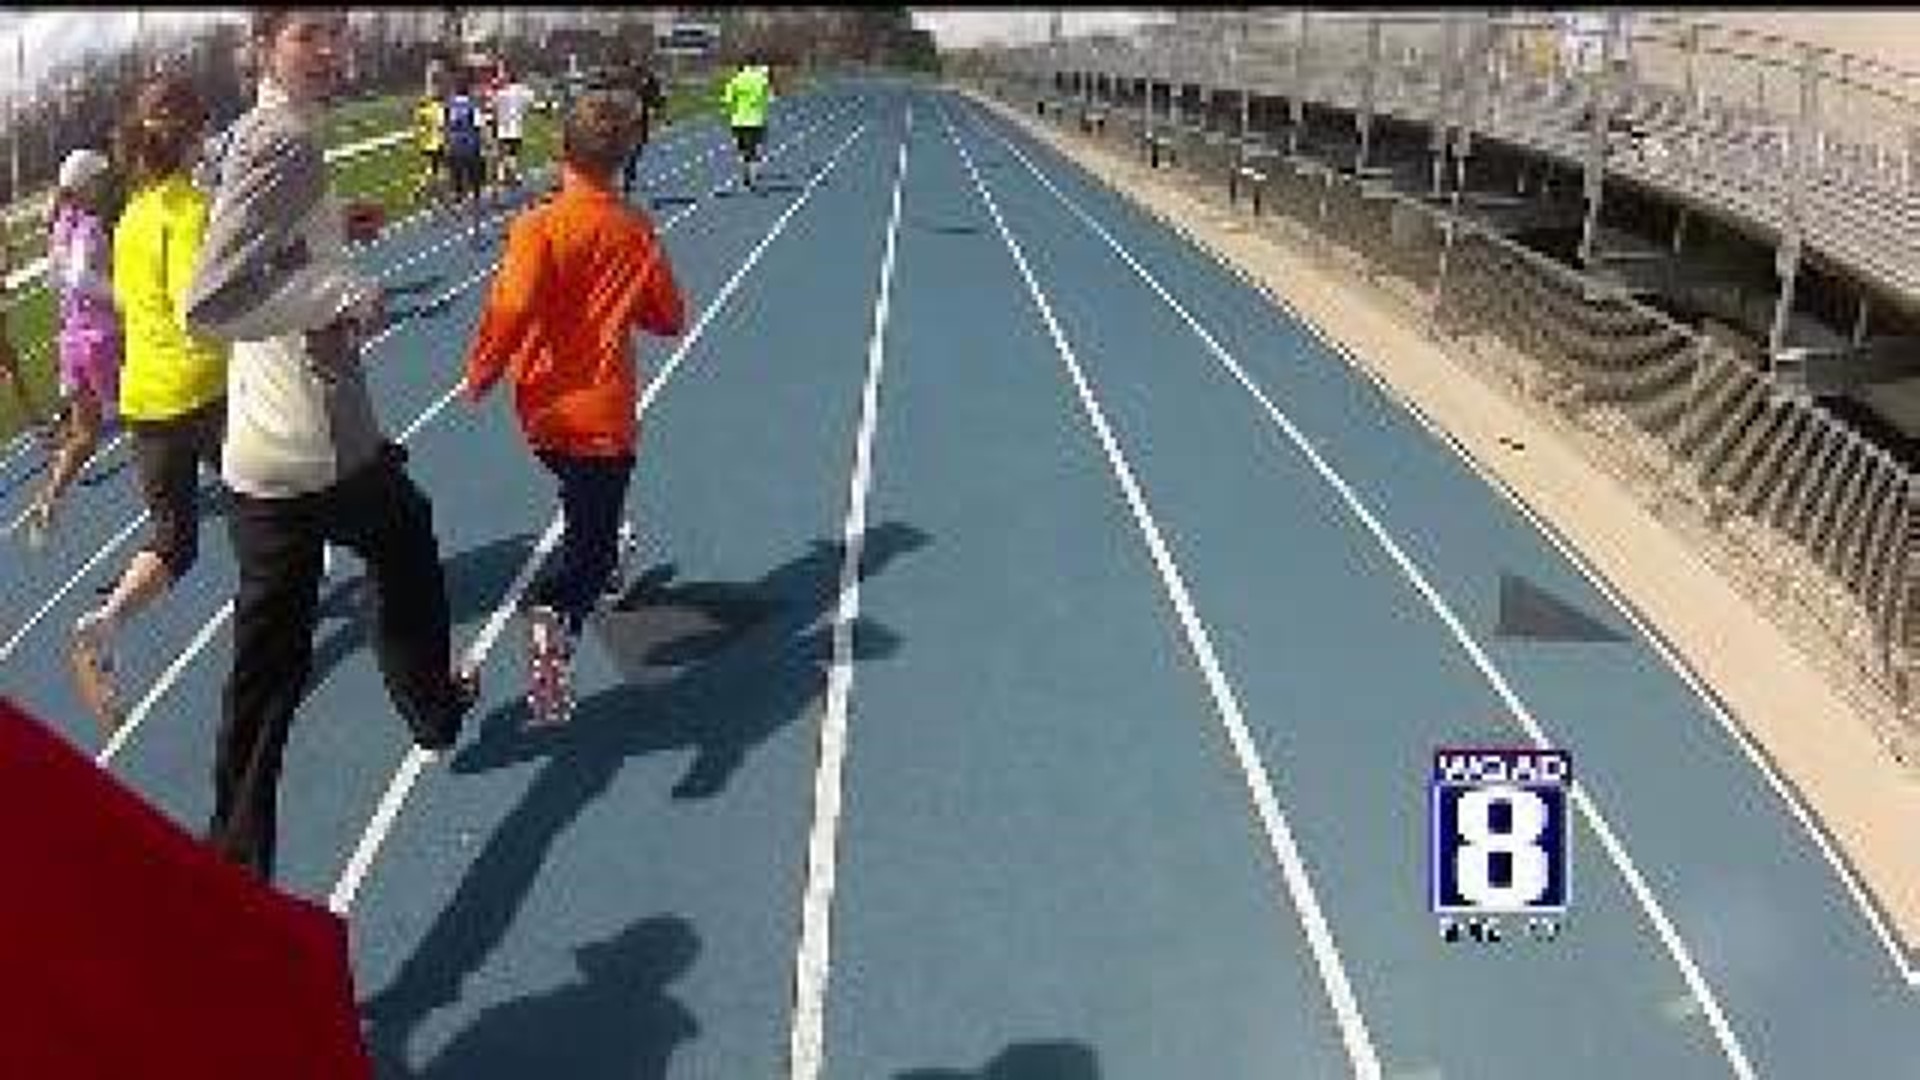 Racers honor Boston Marathon victims